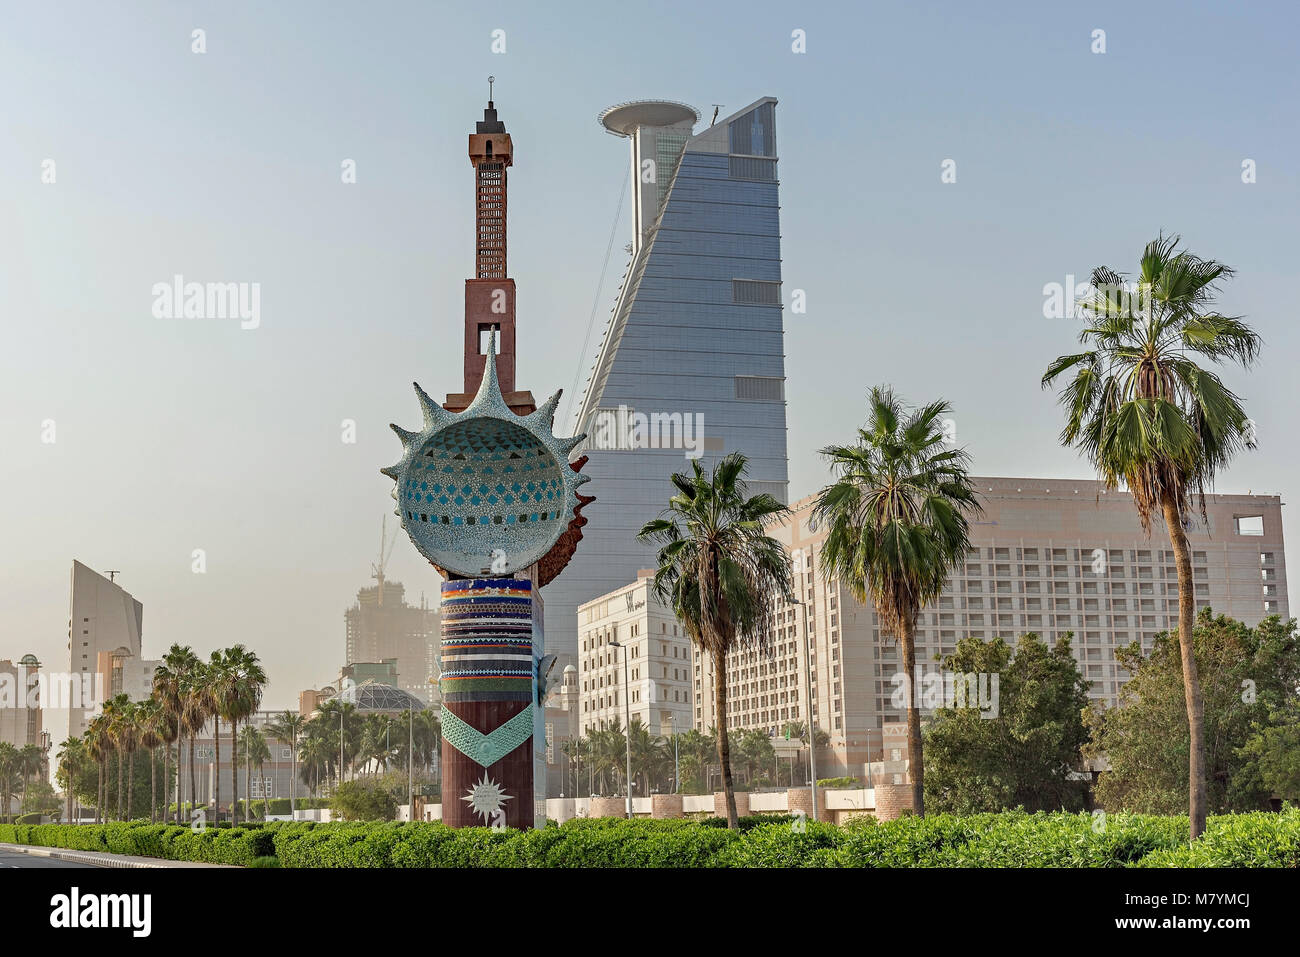 Sculpture and buildings on the cornice in Jeddah, Saudi Arabia. Stock Photo